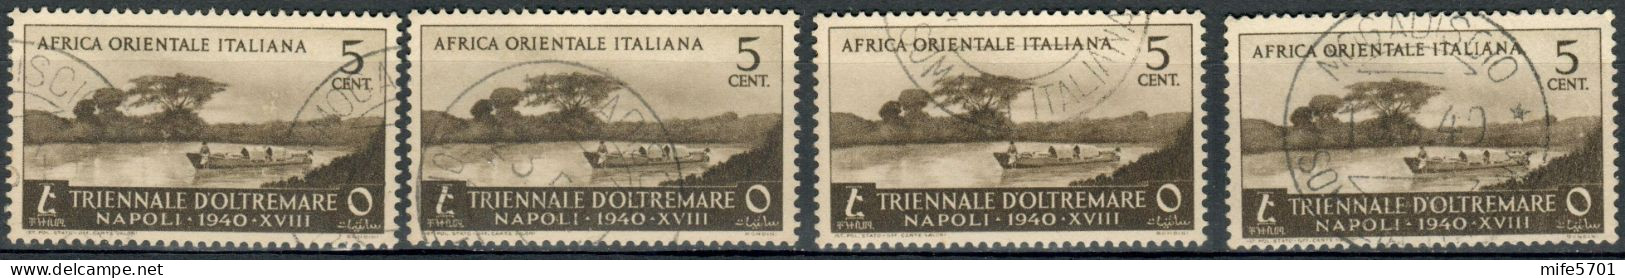 REGNO AFRICA ORIENTALE ITALIANA 1940 A.O.I. 1ª MOSTRA TRIENNALE D'OLTREMARE 4 ESEMPLARI DA C. 5 USATI - SASSONE 27 - Italienisch Ost-Afrika